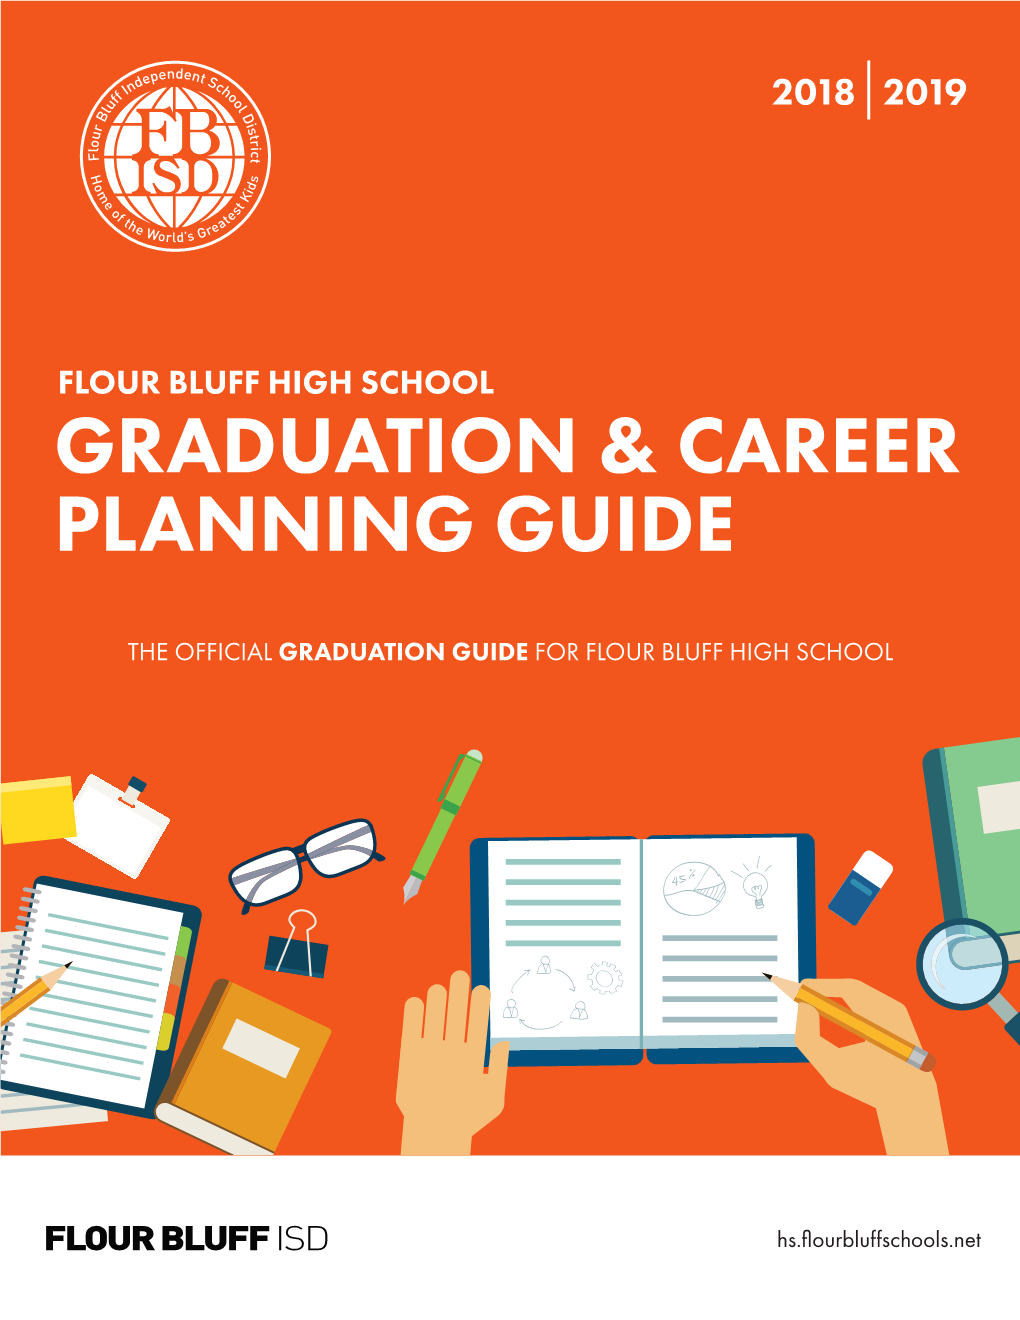 Planning Guide Graduation & Career